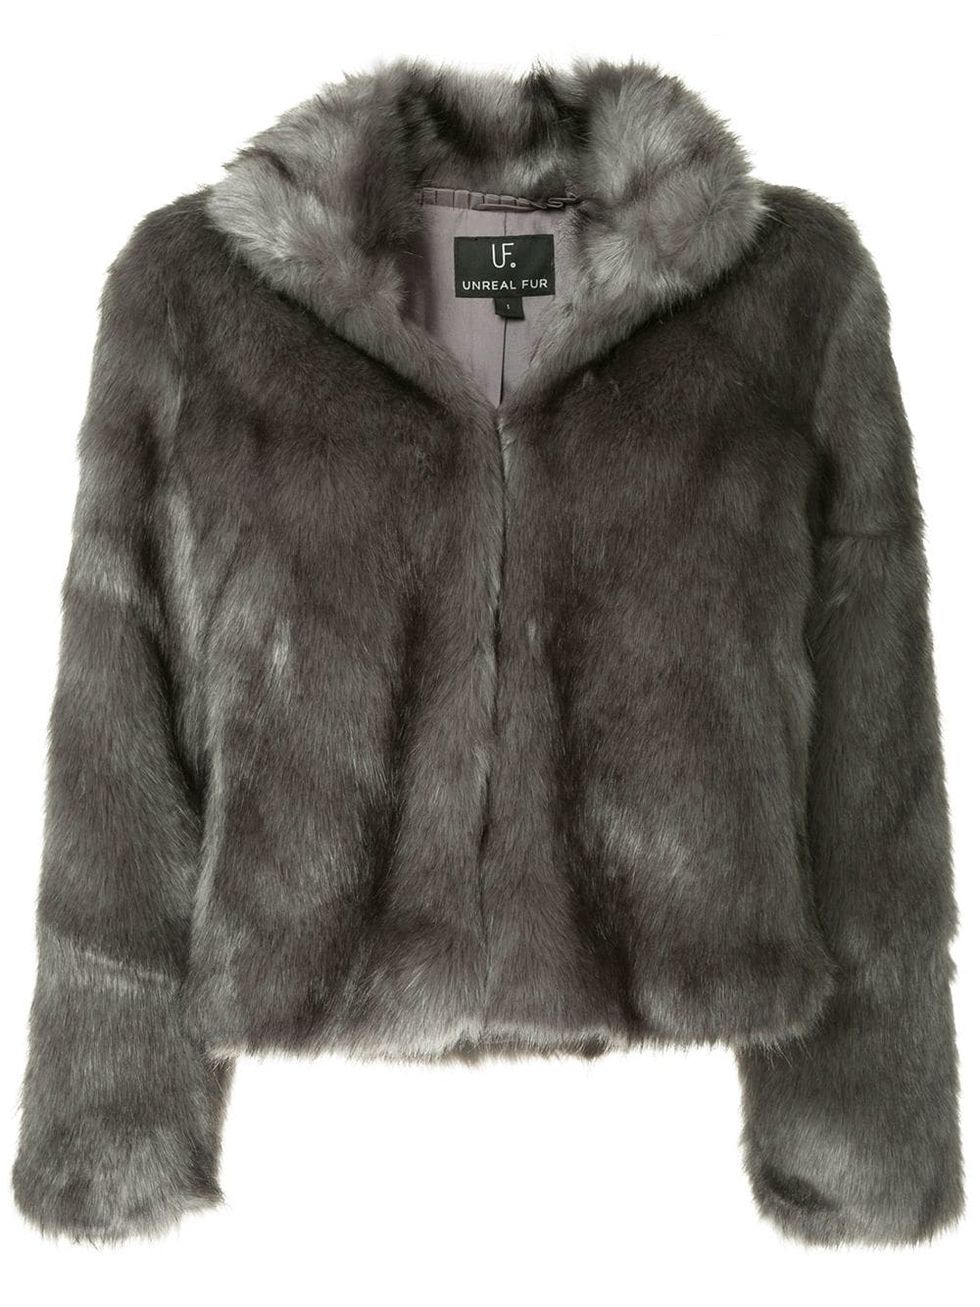 Topshop Faux-Fur Coat  Autumn 2018's Biggest Coat Trends Are So